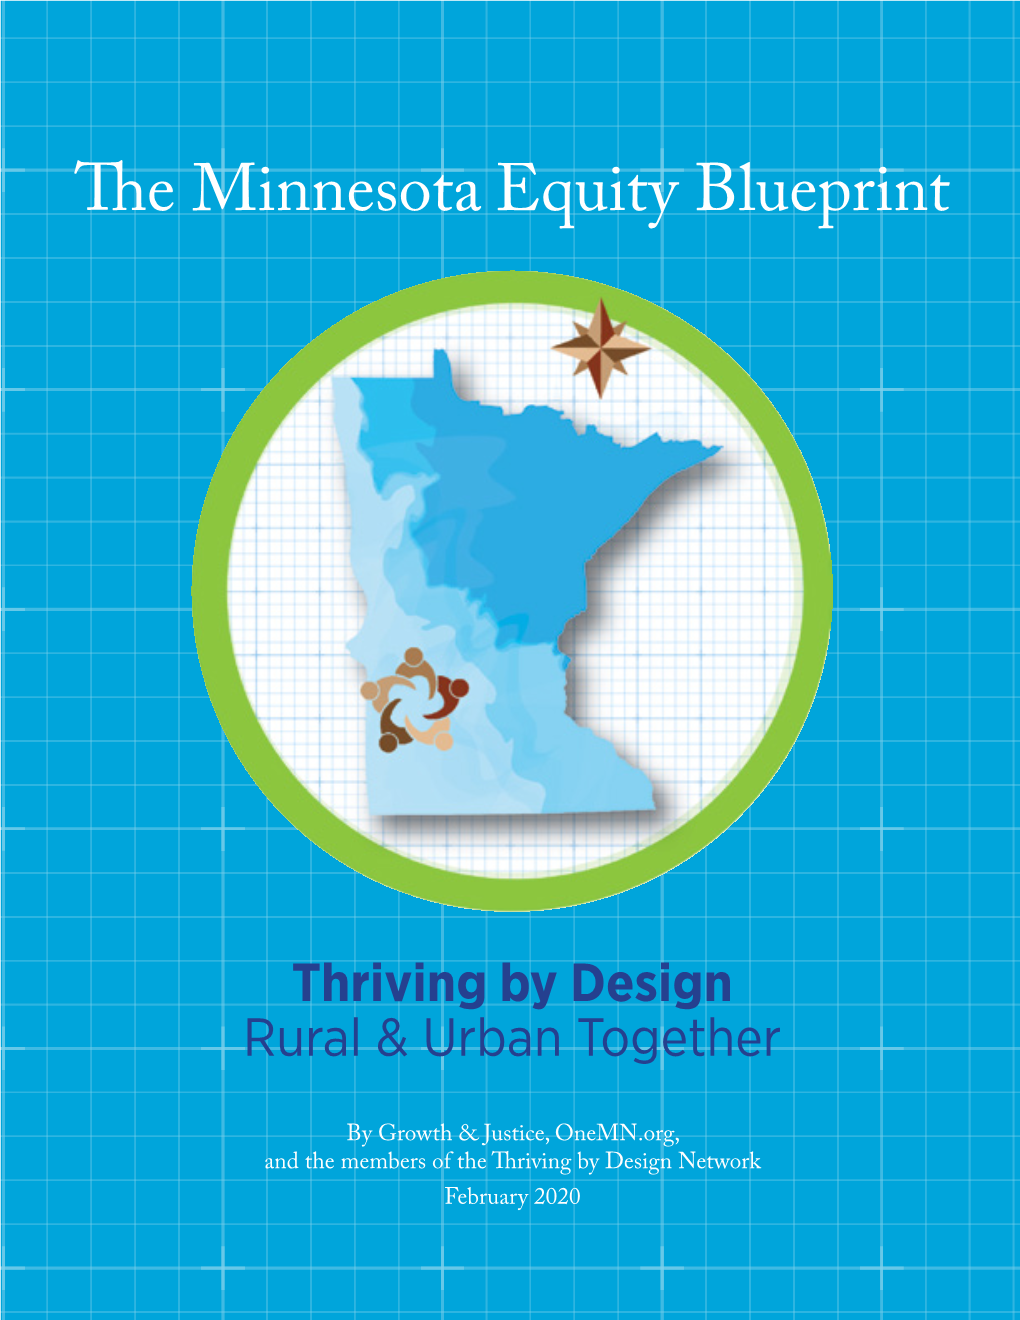 The Minnesota Equity Blueprint